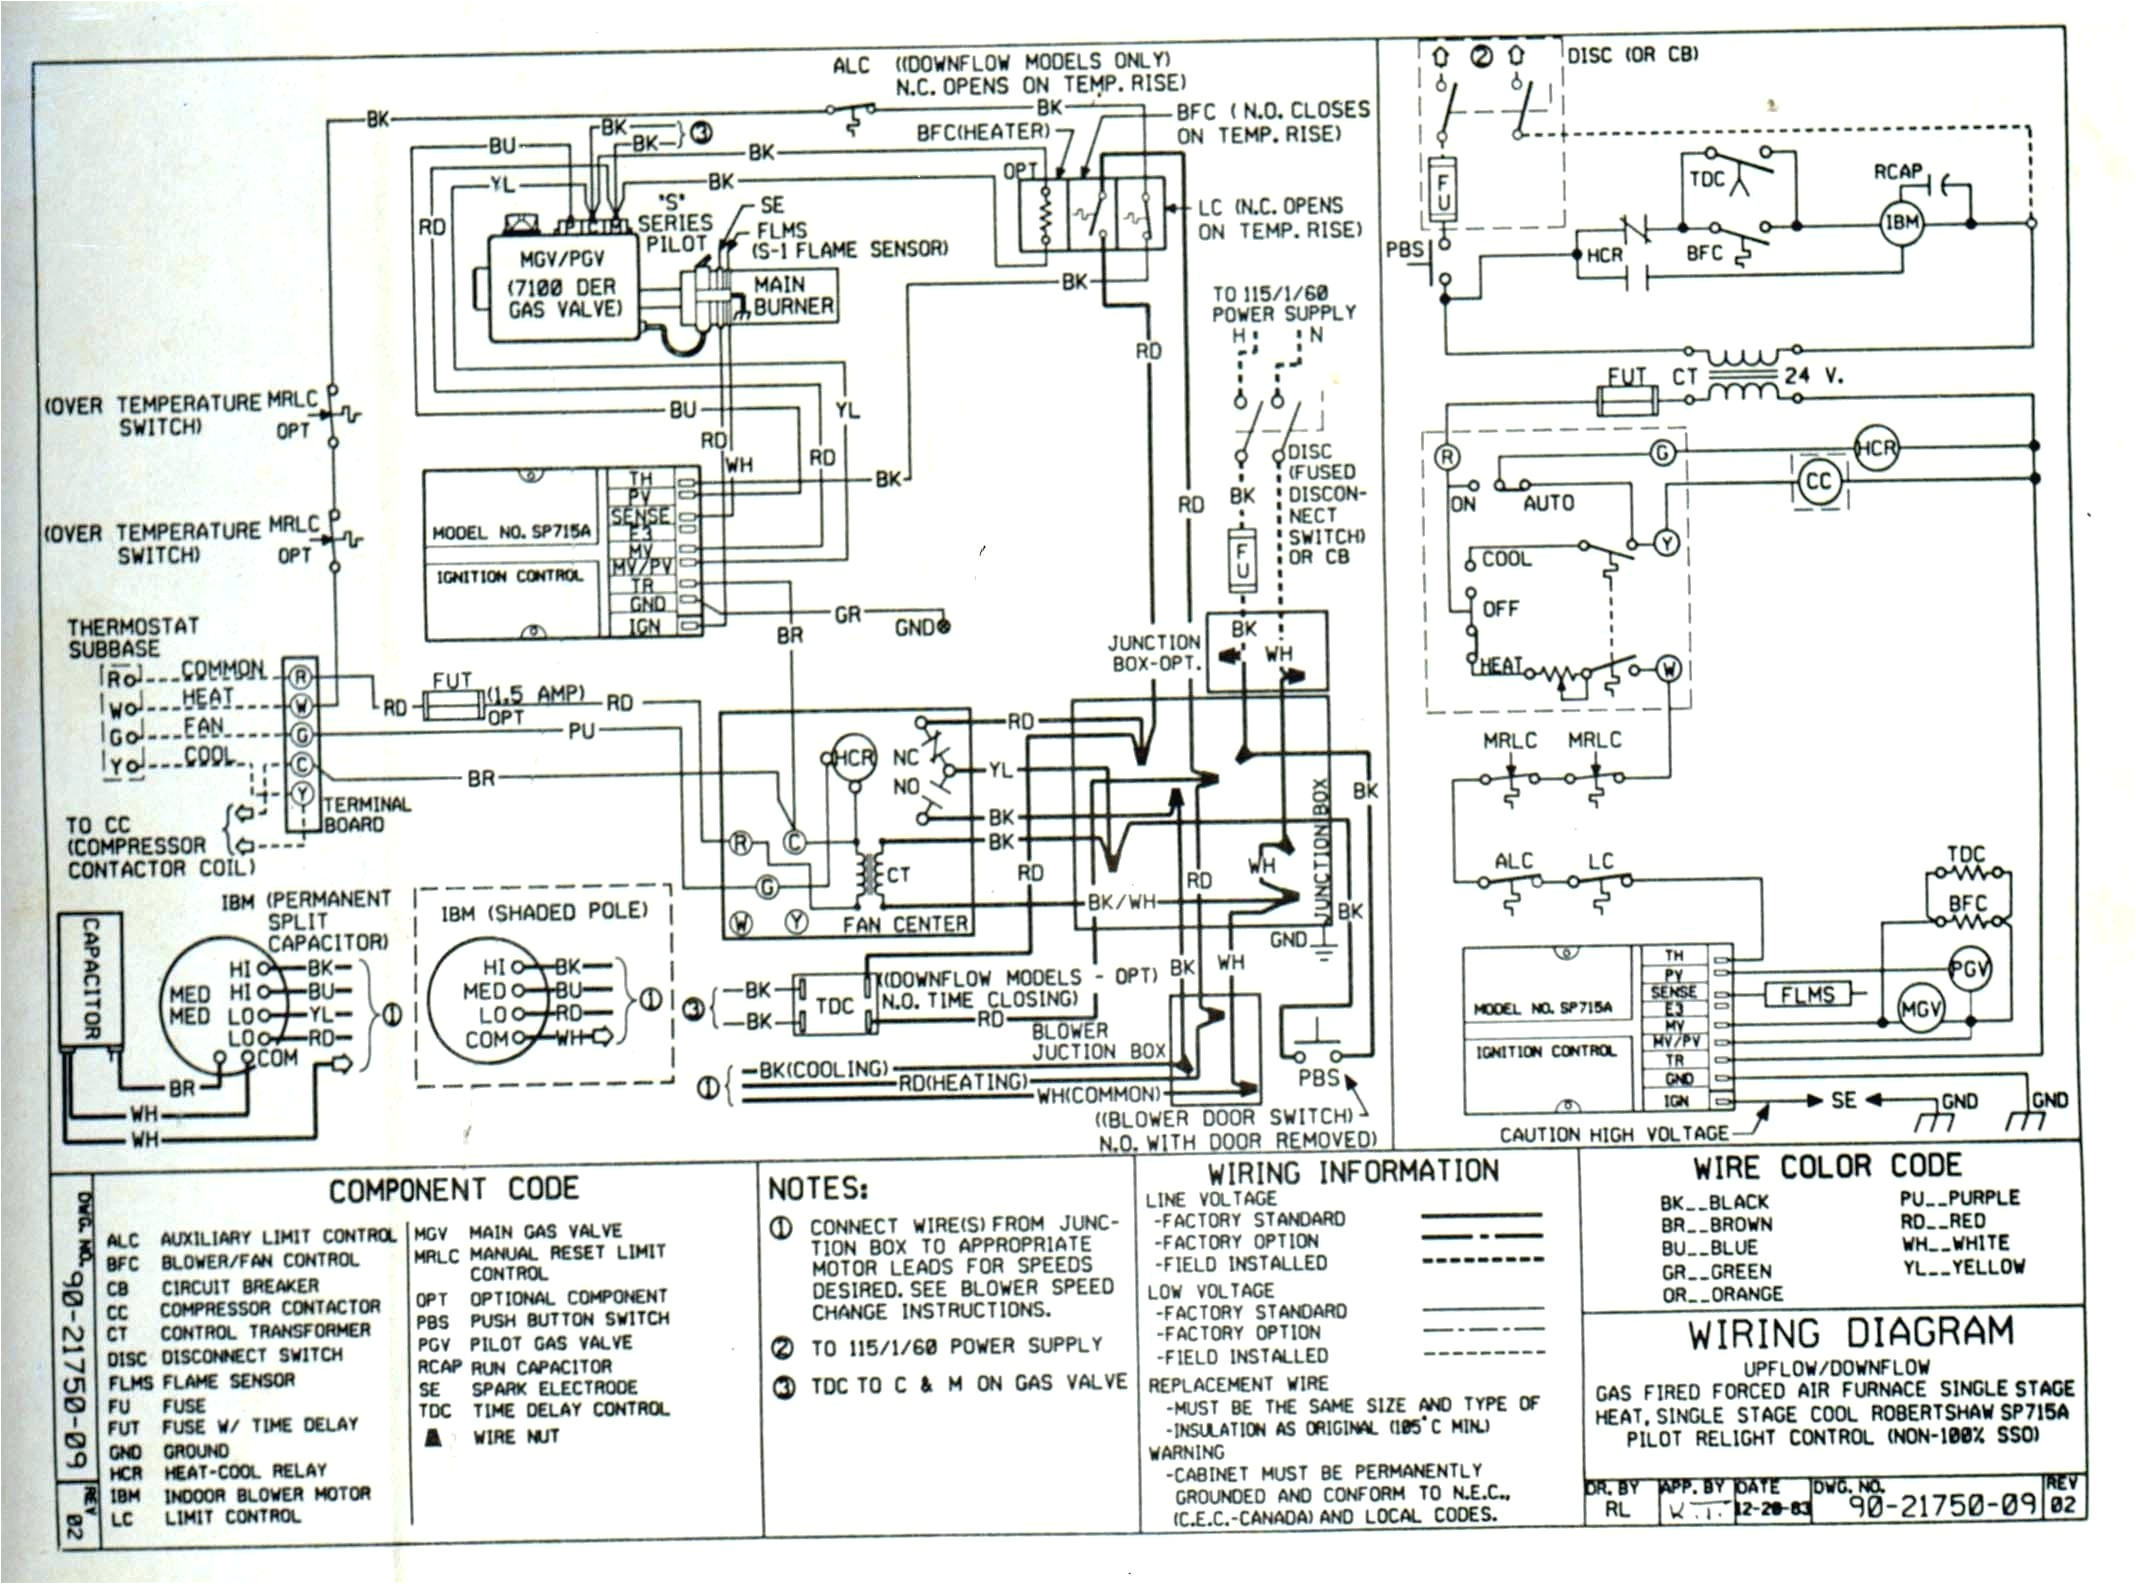 trane rooftop unit wiring diagram trane wiring diagrams model xr80 simple electronic circuits u2022 rh wiringdiagramone today trane hvac system wiring diagram trane hvac system wiring 1g jpg